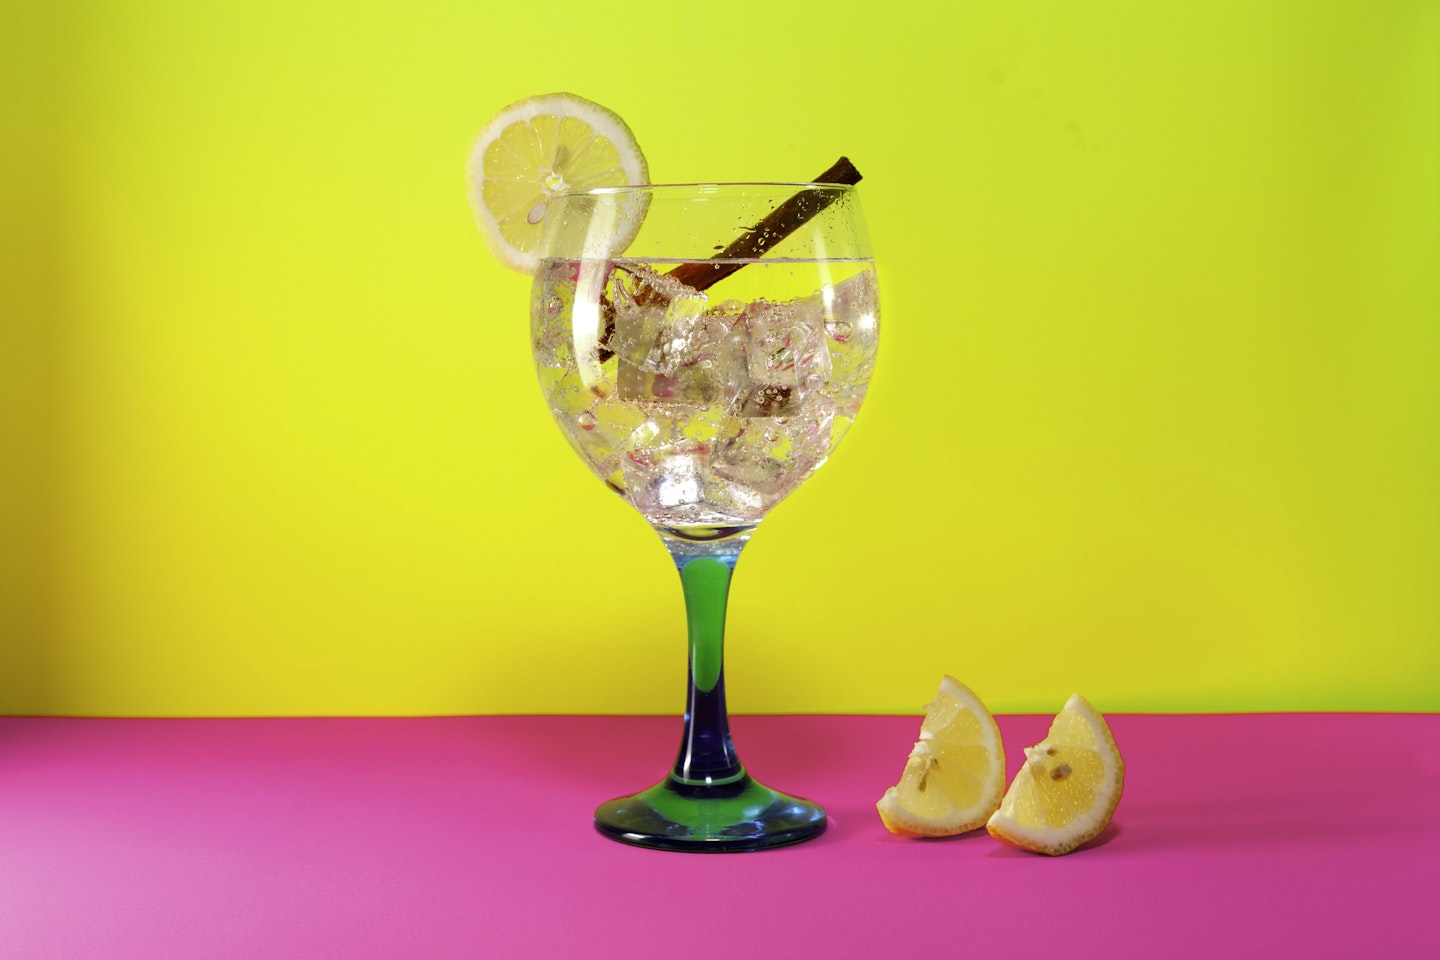 Goblet of gin with sliced lemon on the side